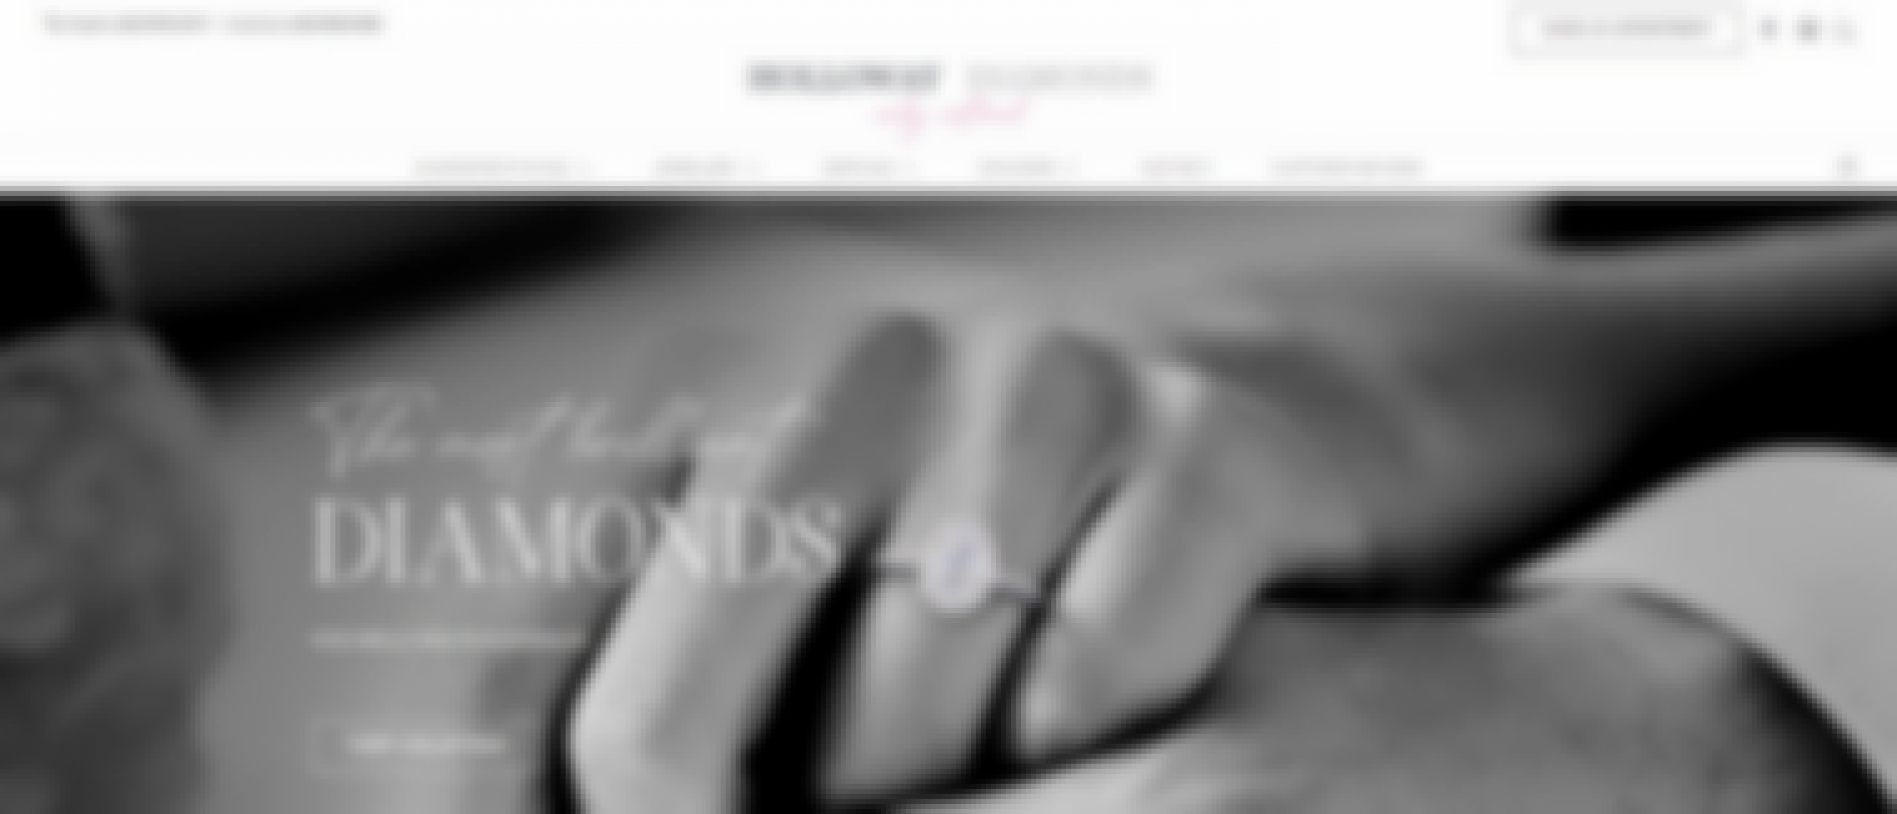 holloway diamonds engagement rings & wedding band shop melbourne